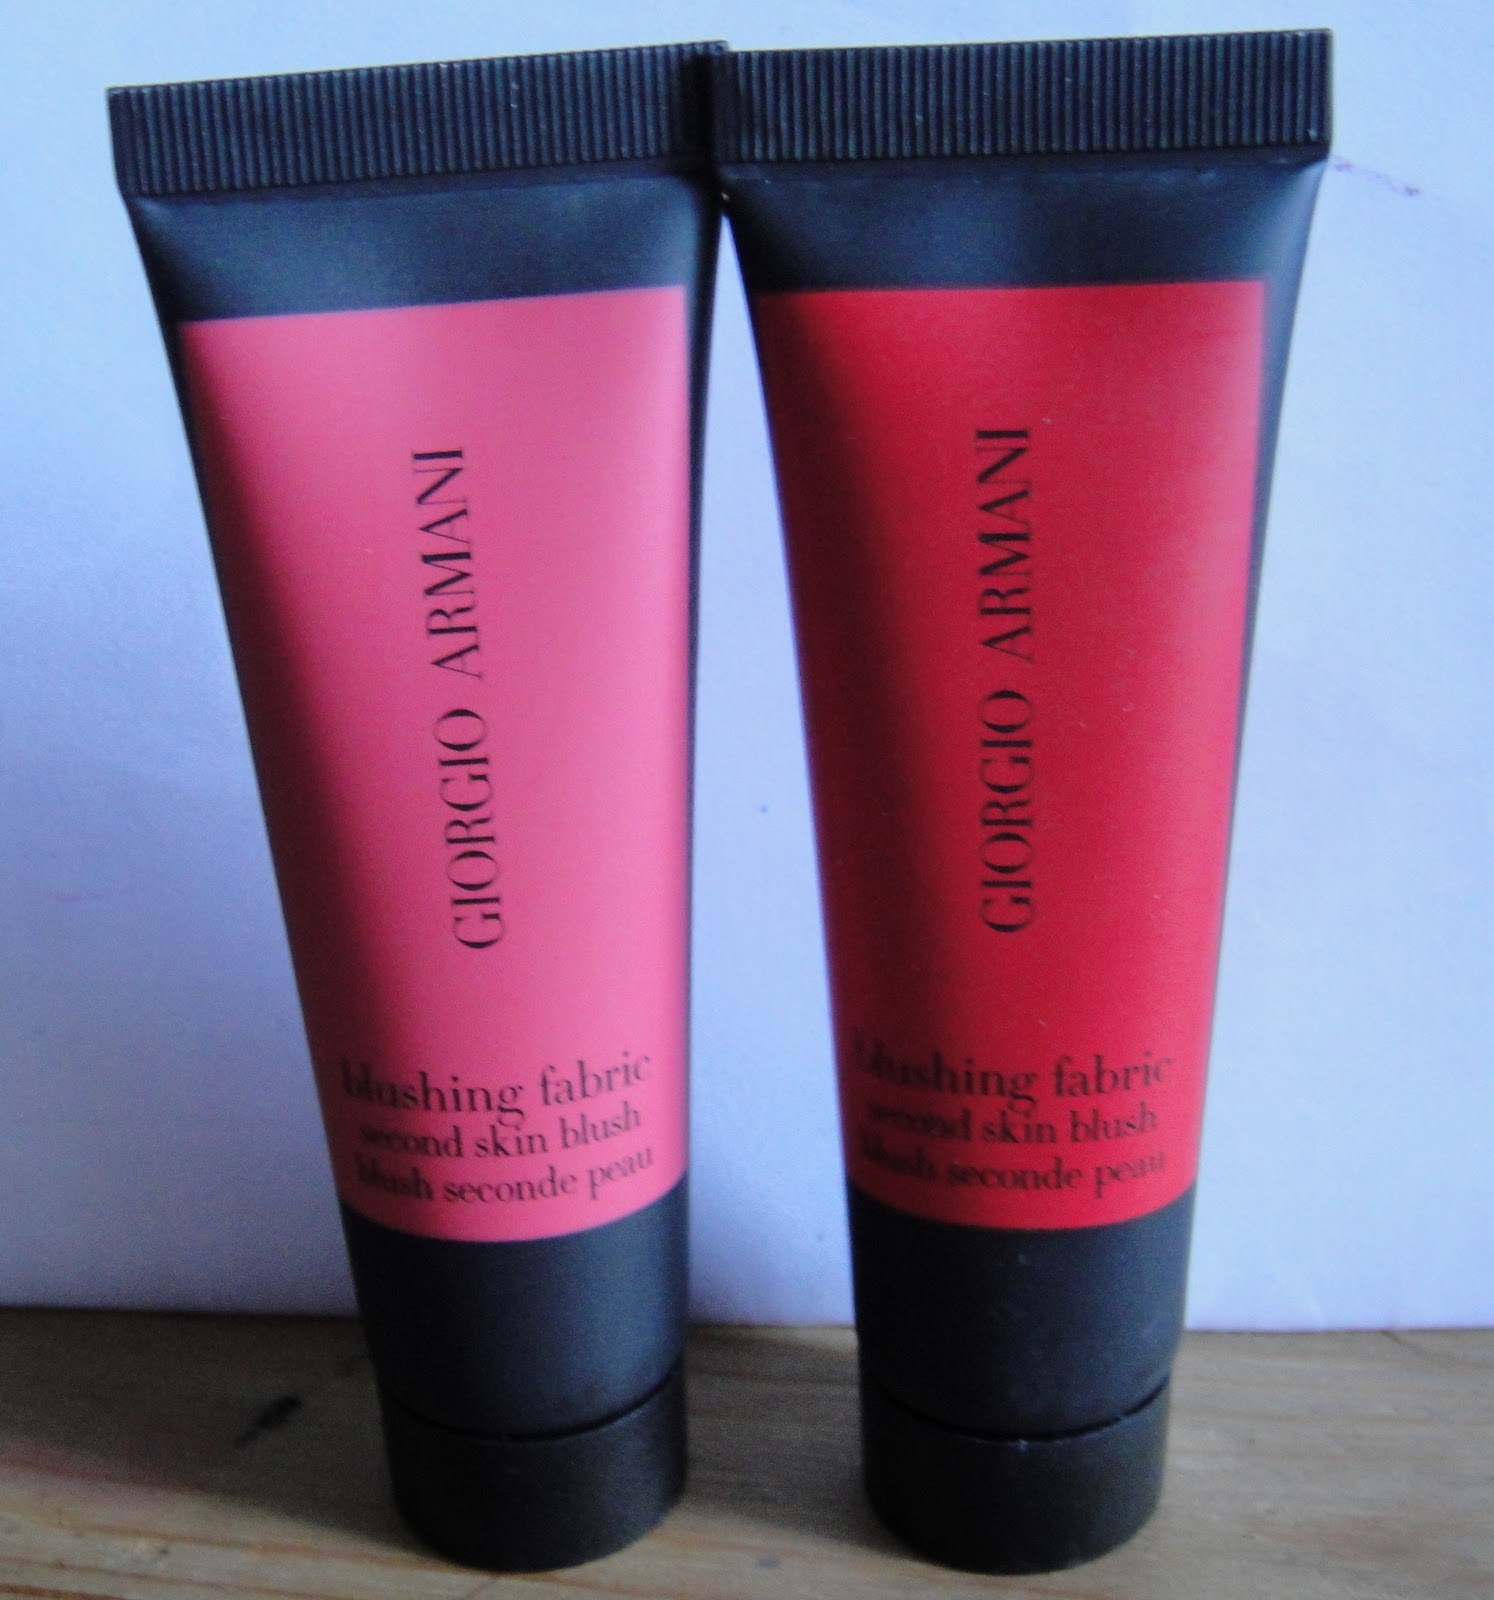 Review - Armani Blushing Fabric Second Skin Blush | Get Lippie